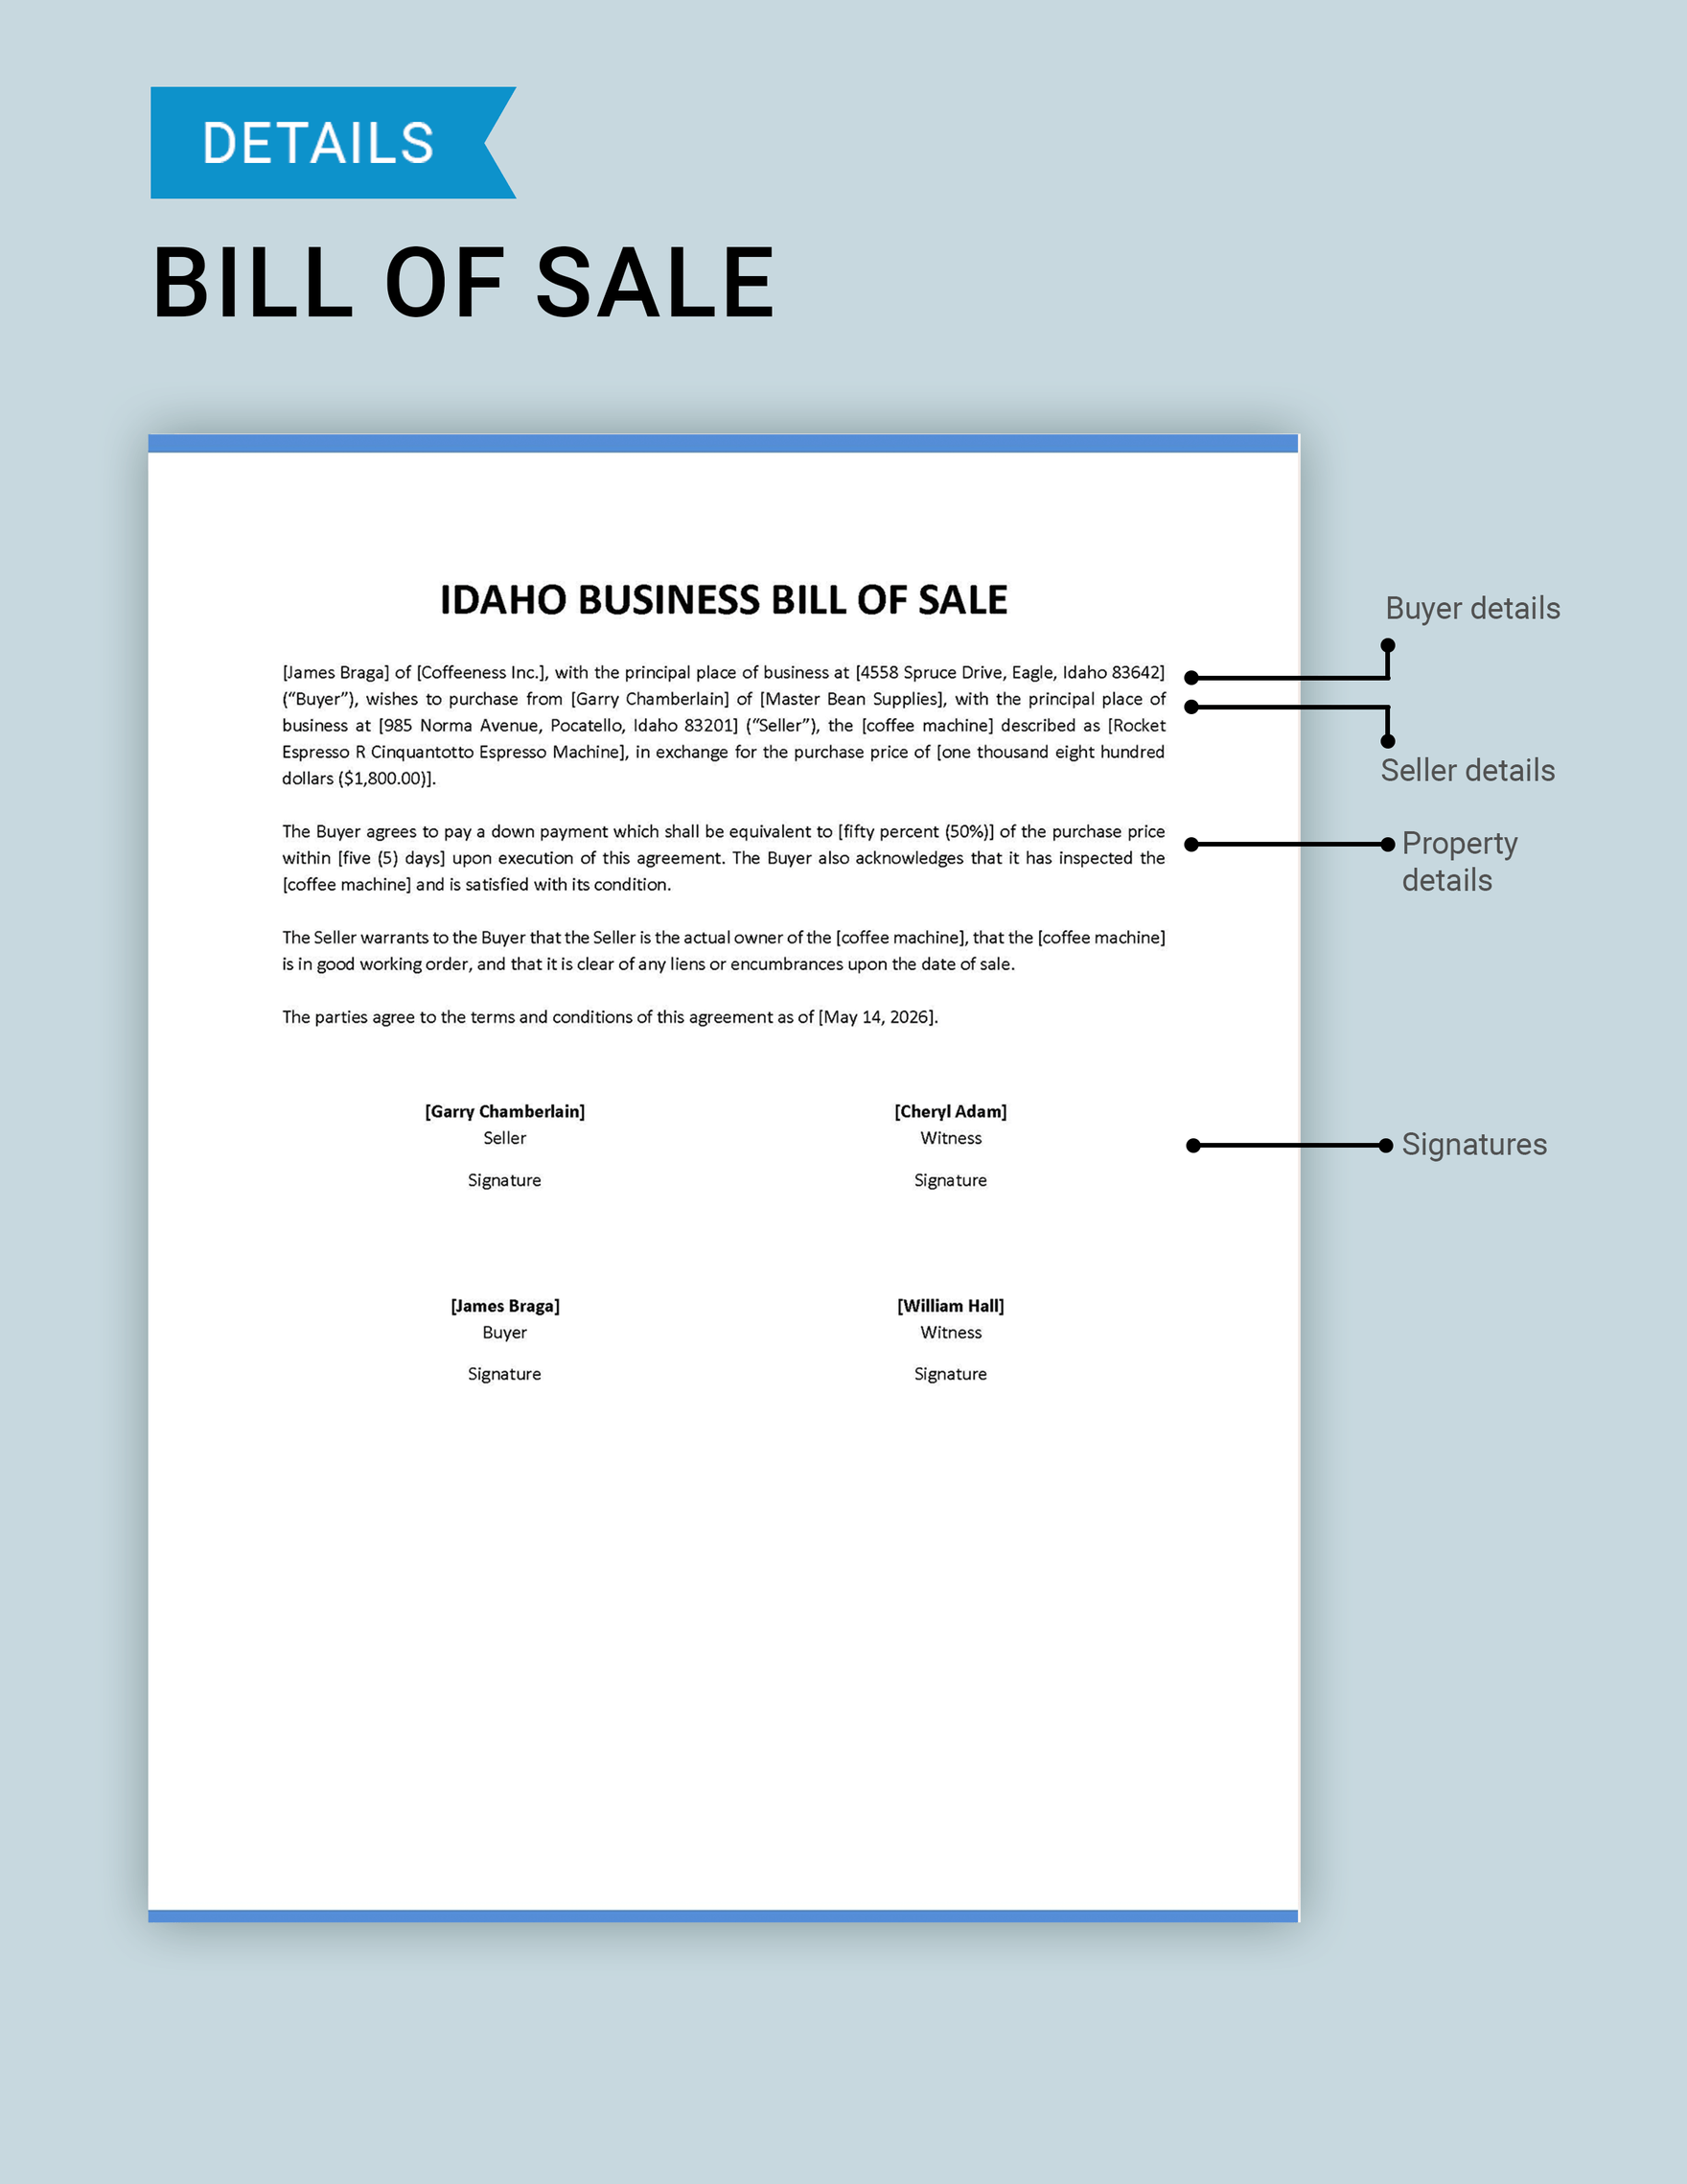 Idaho Business Bill of Sale Template